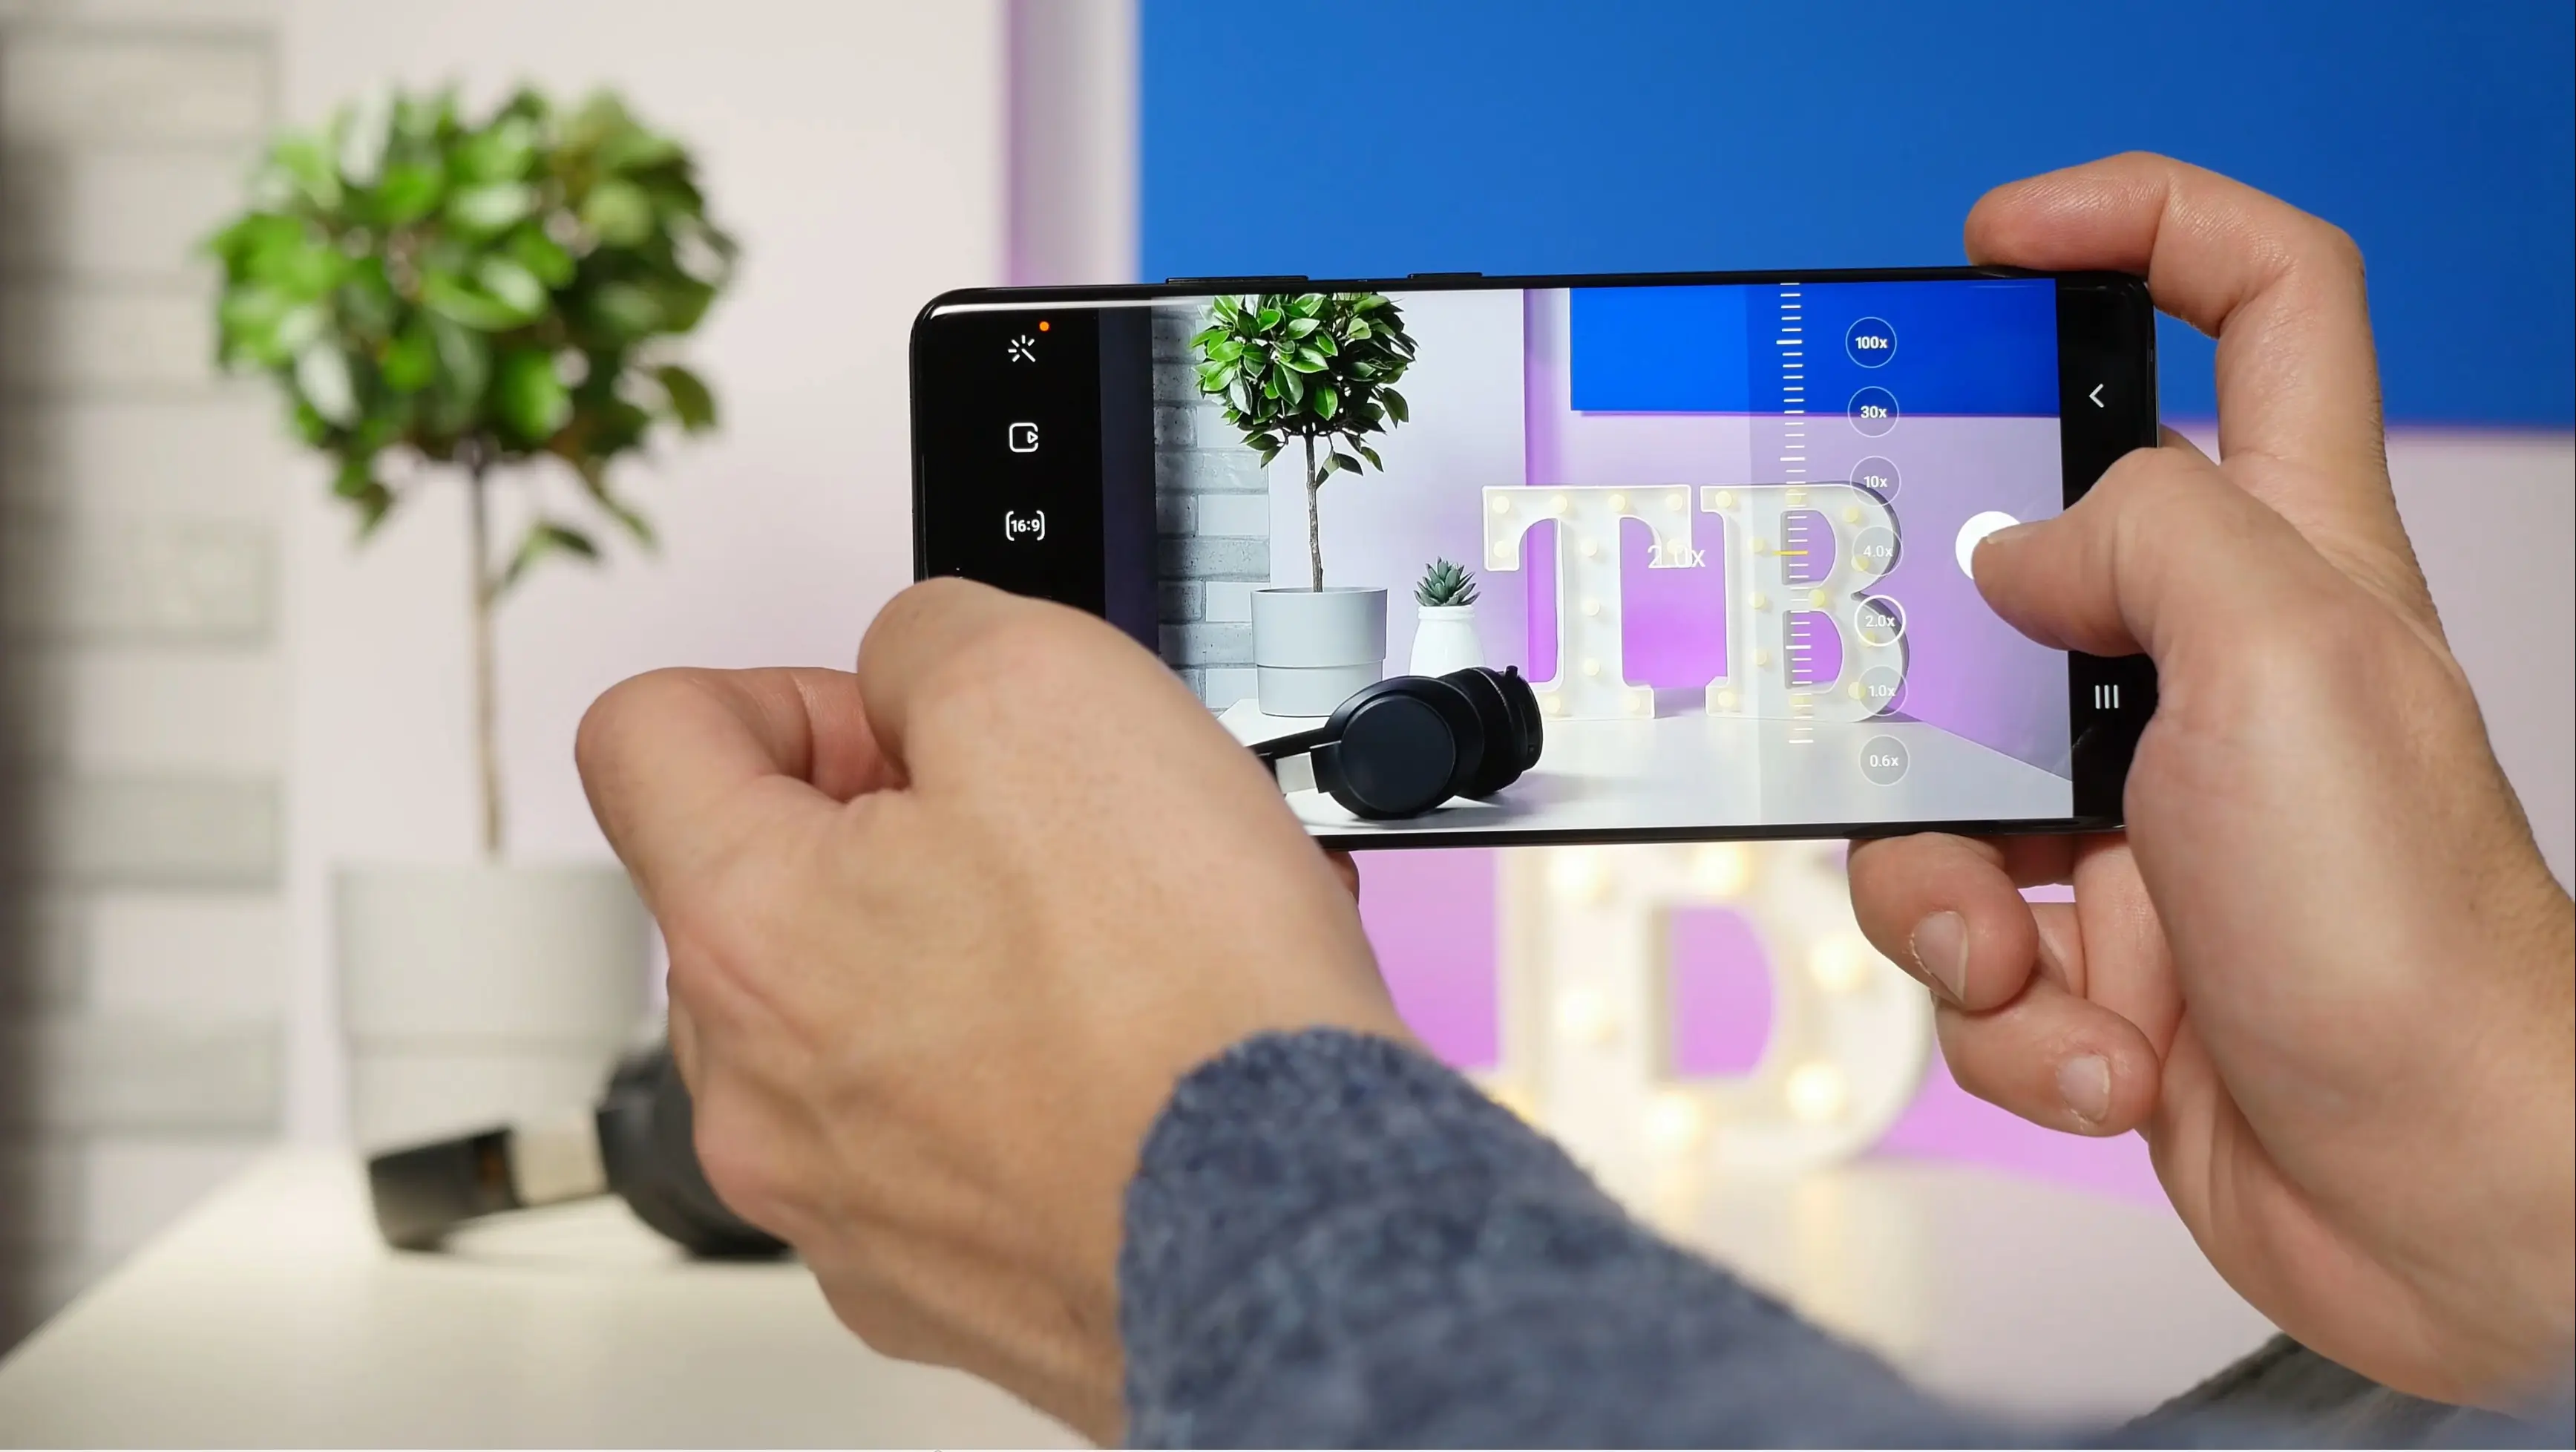 Samsung Galaxy S21 Ultra hands-on Techblog